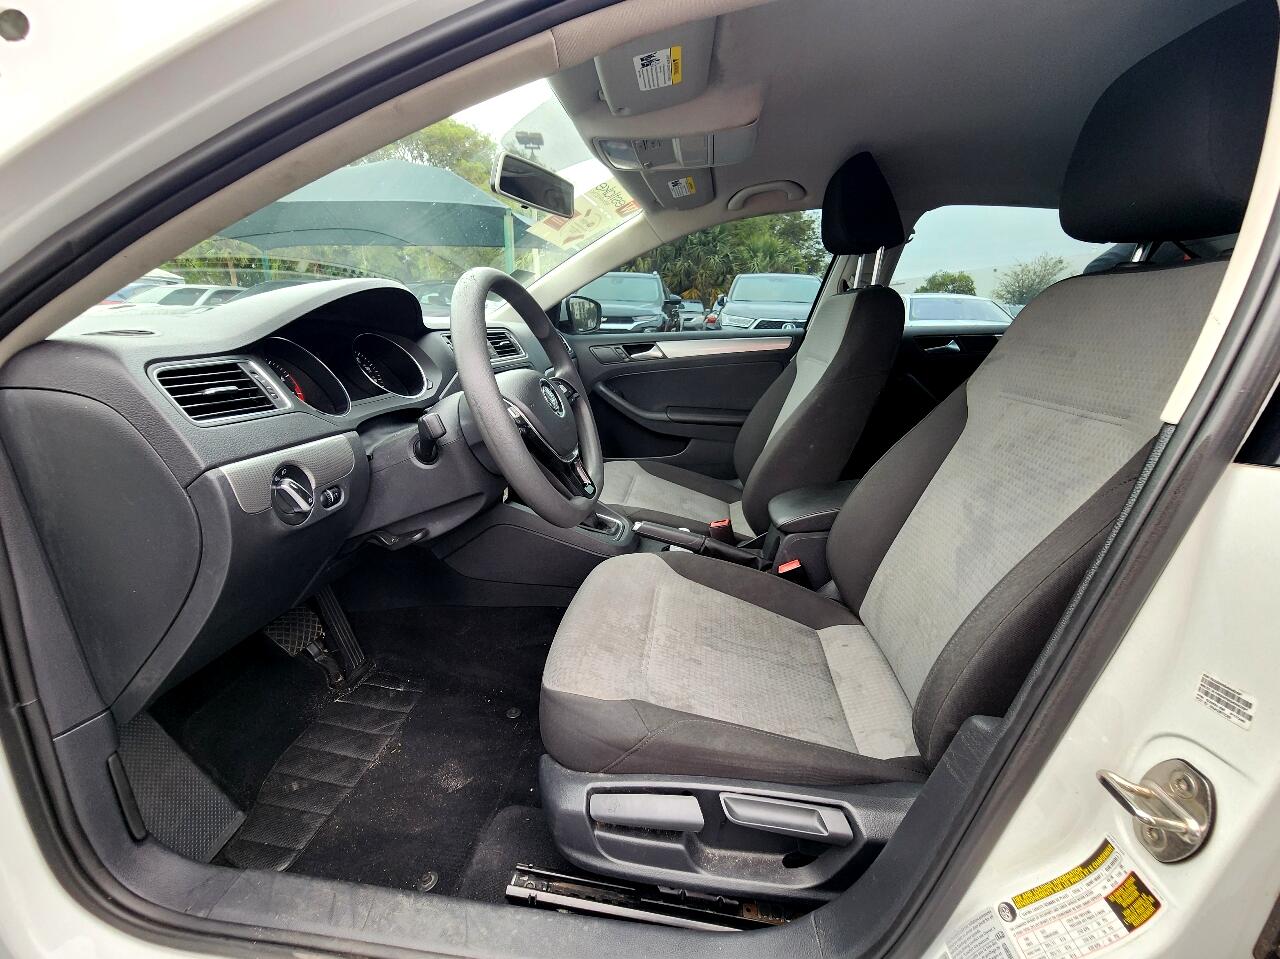 2017 VOLKSWAGEN Jetta Sedan - $12,999